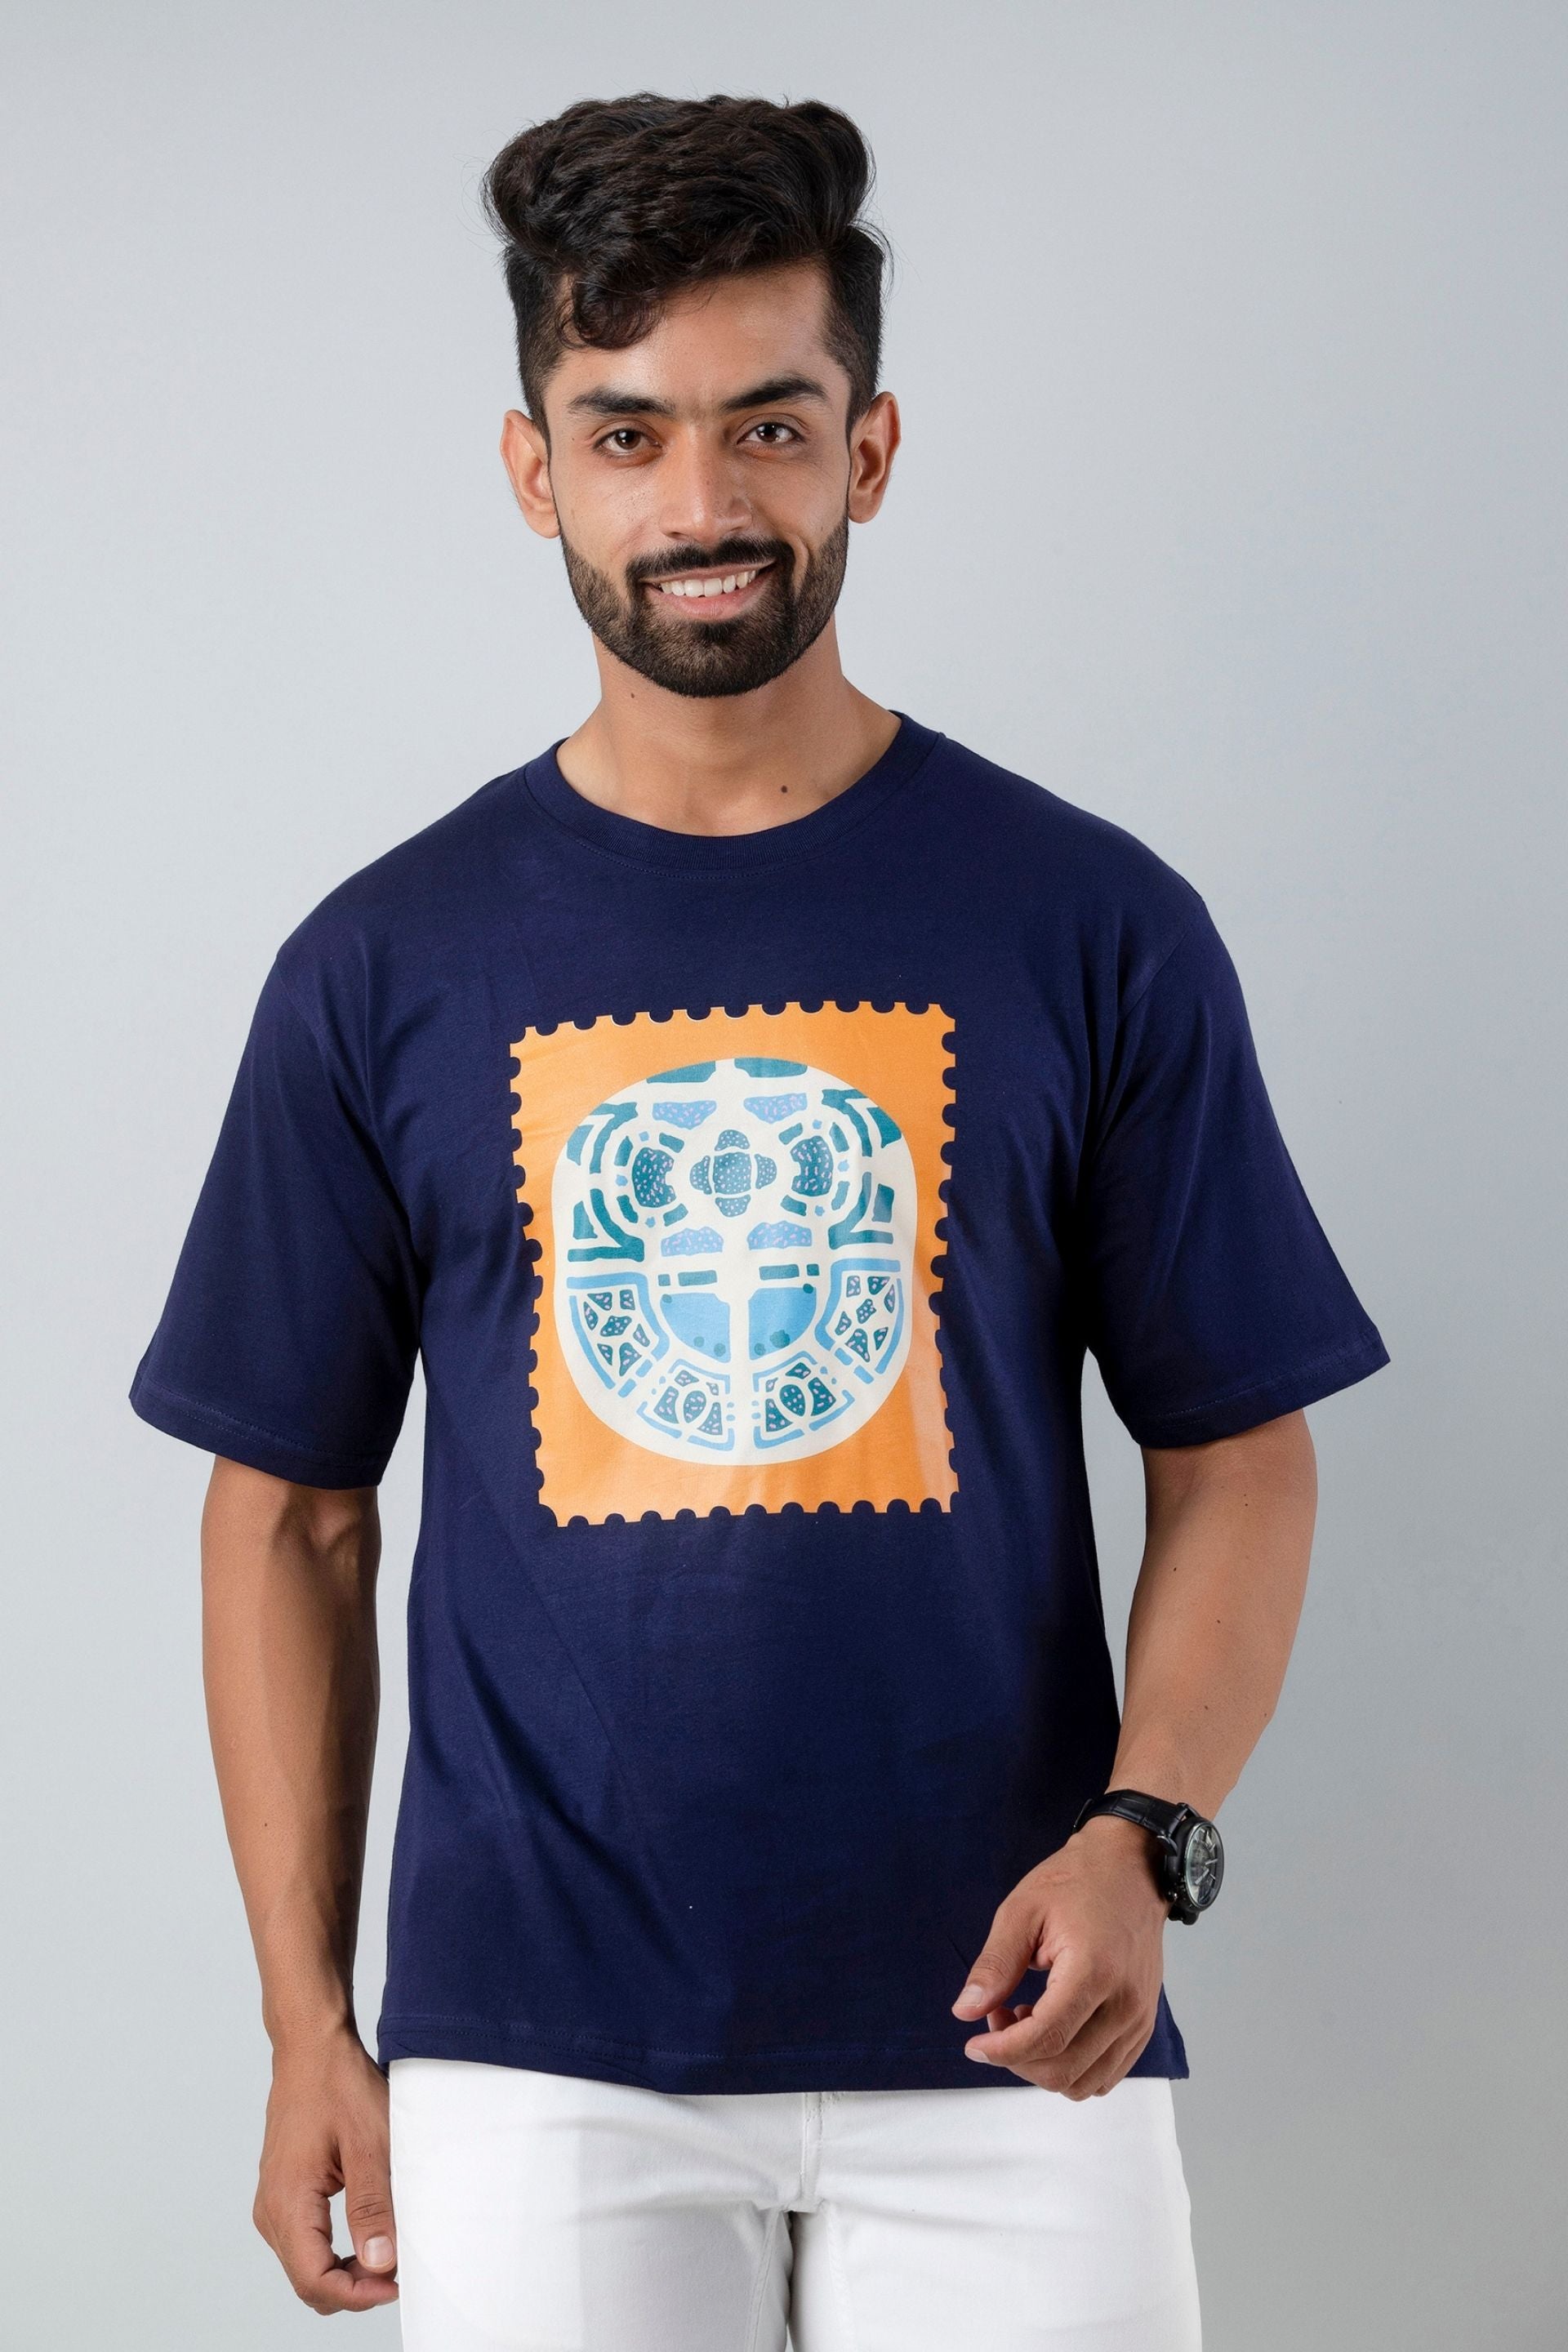 Firangi Yarn Oversize Tshirt in Dark Blue With Front Print (Baggy Tee)